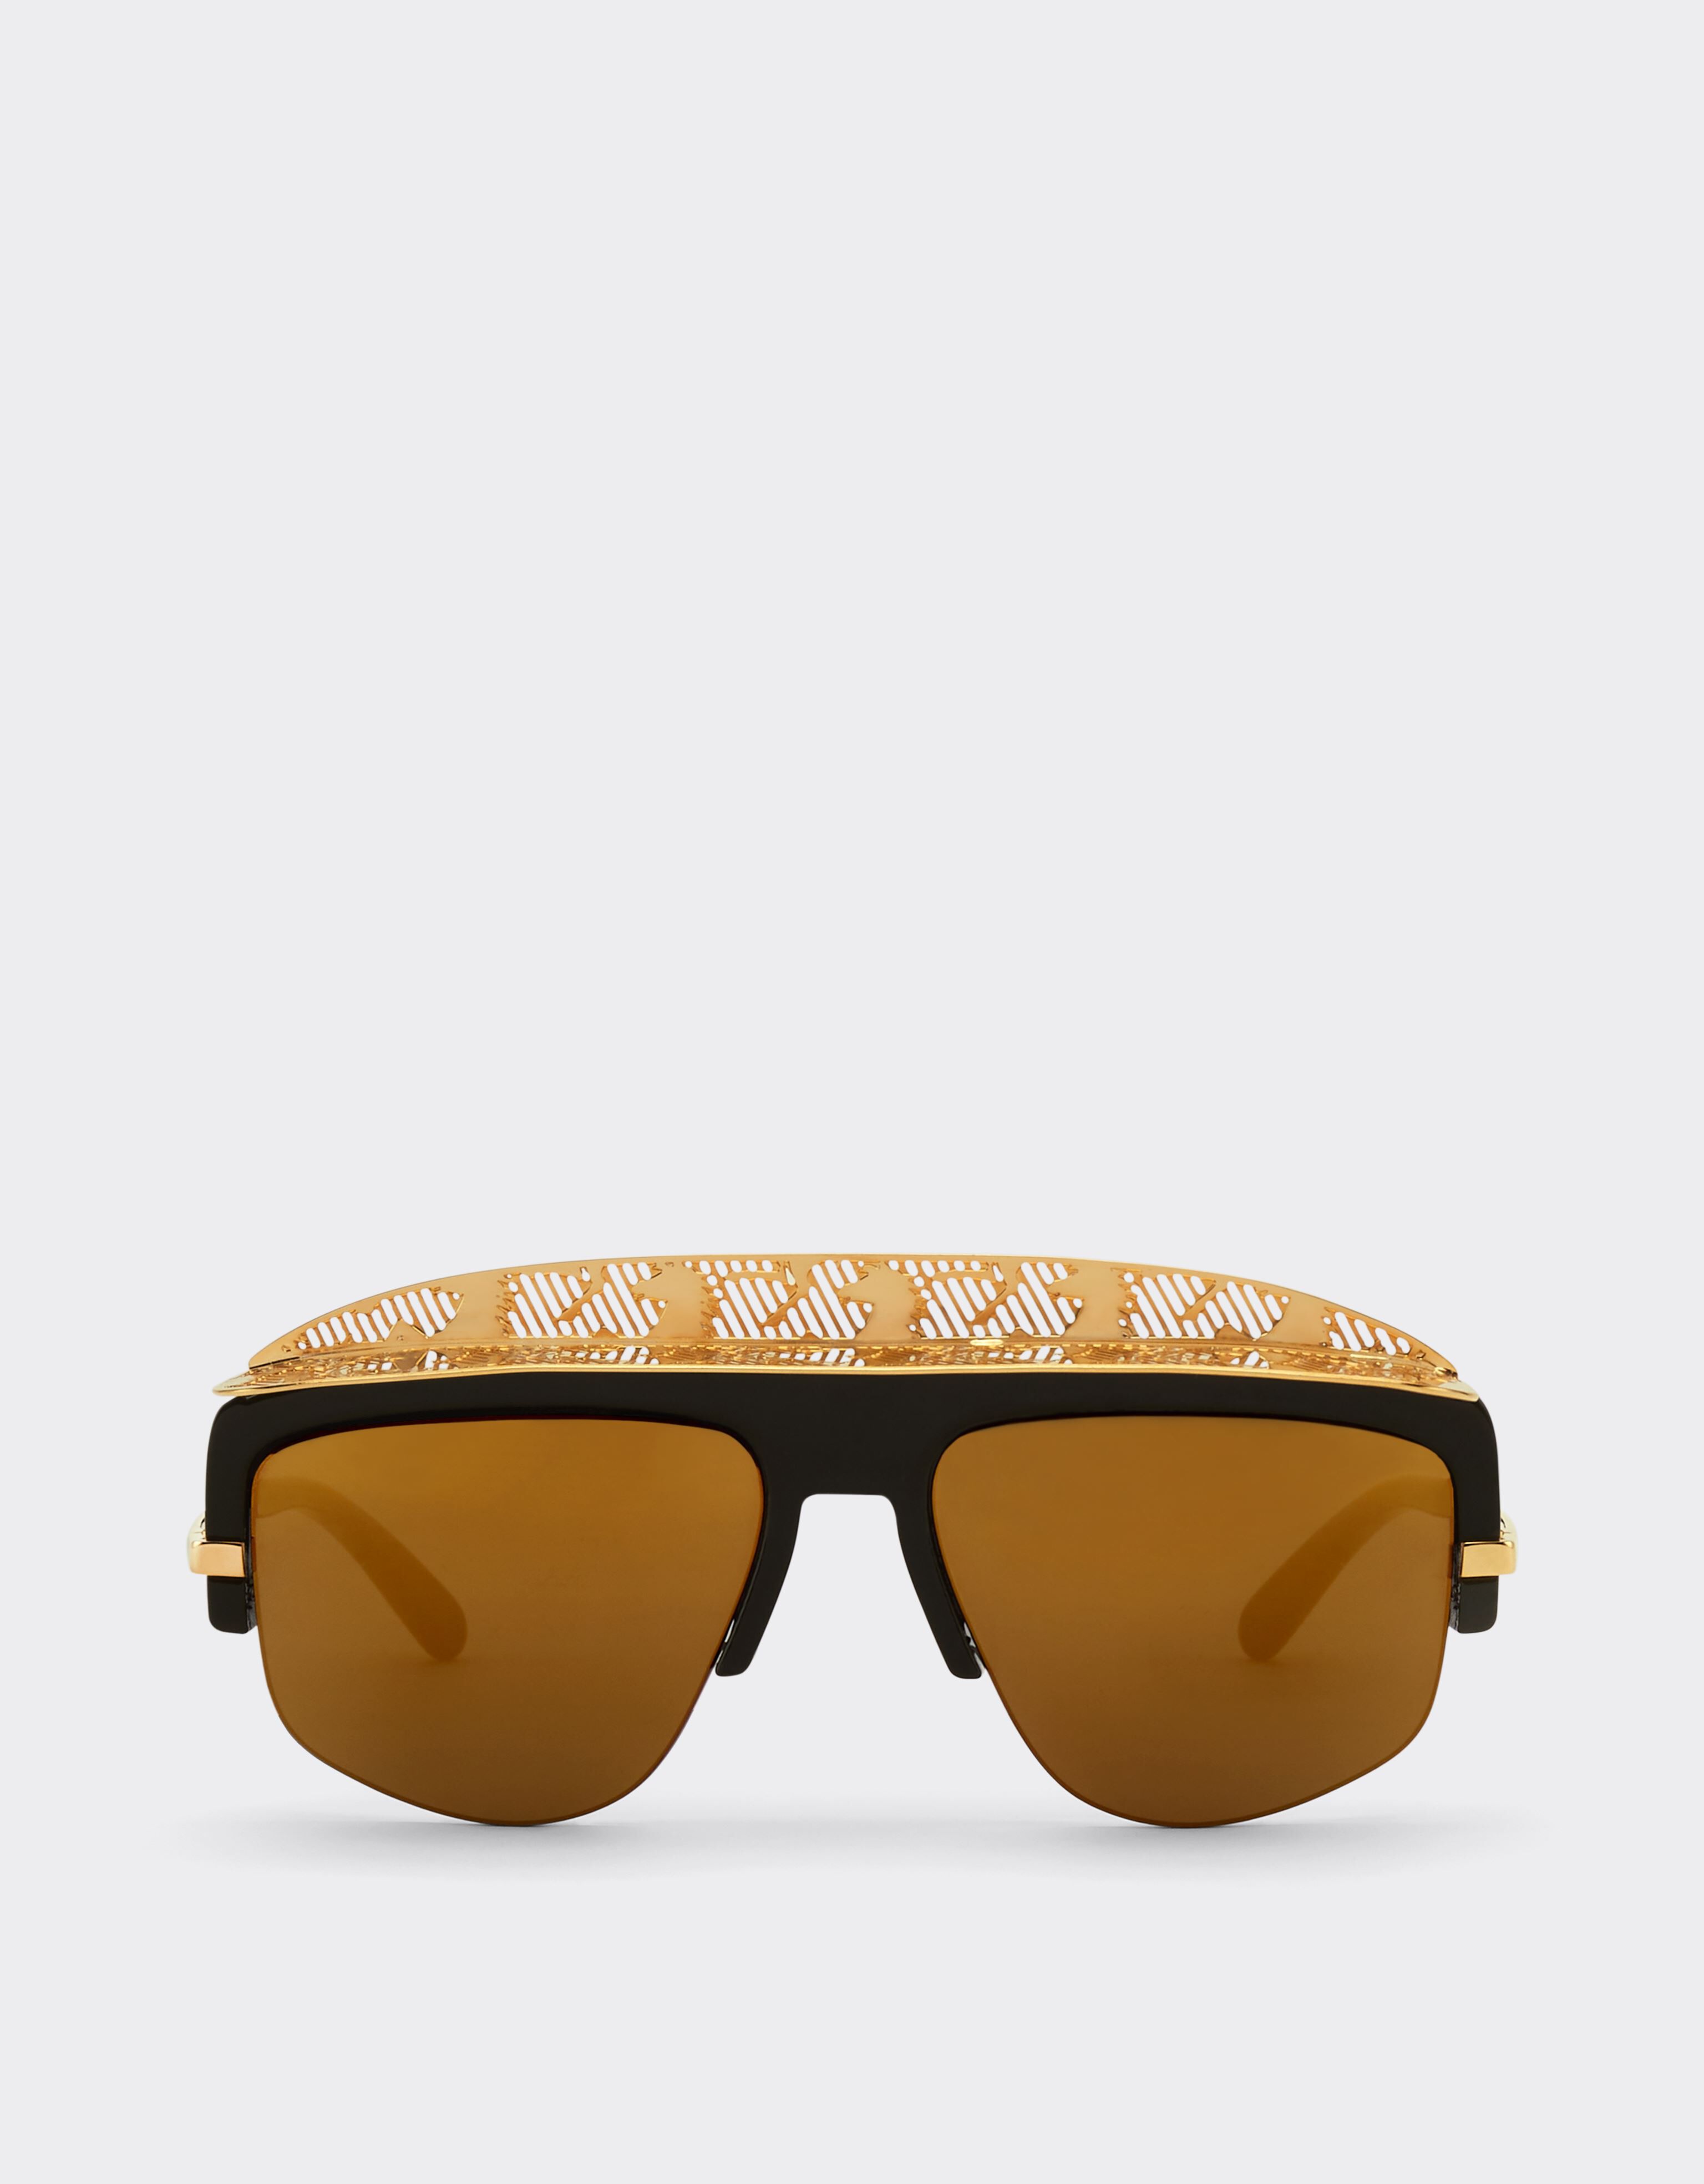 Ferrari Ferrari sunglasses with gold mirror lens Black Matt F1250f